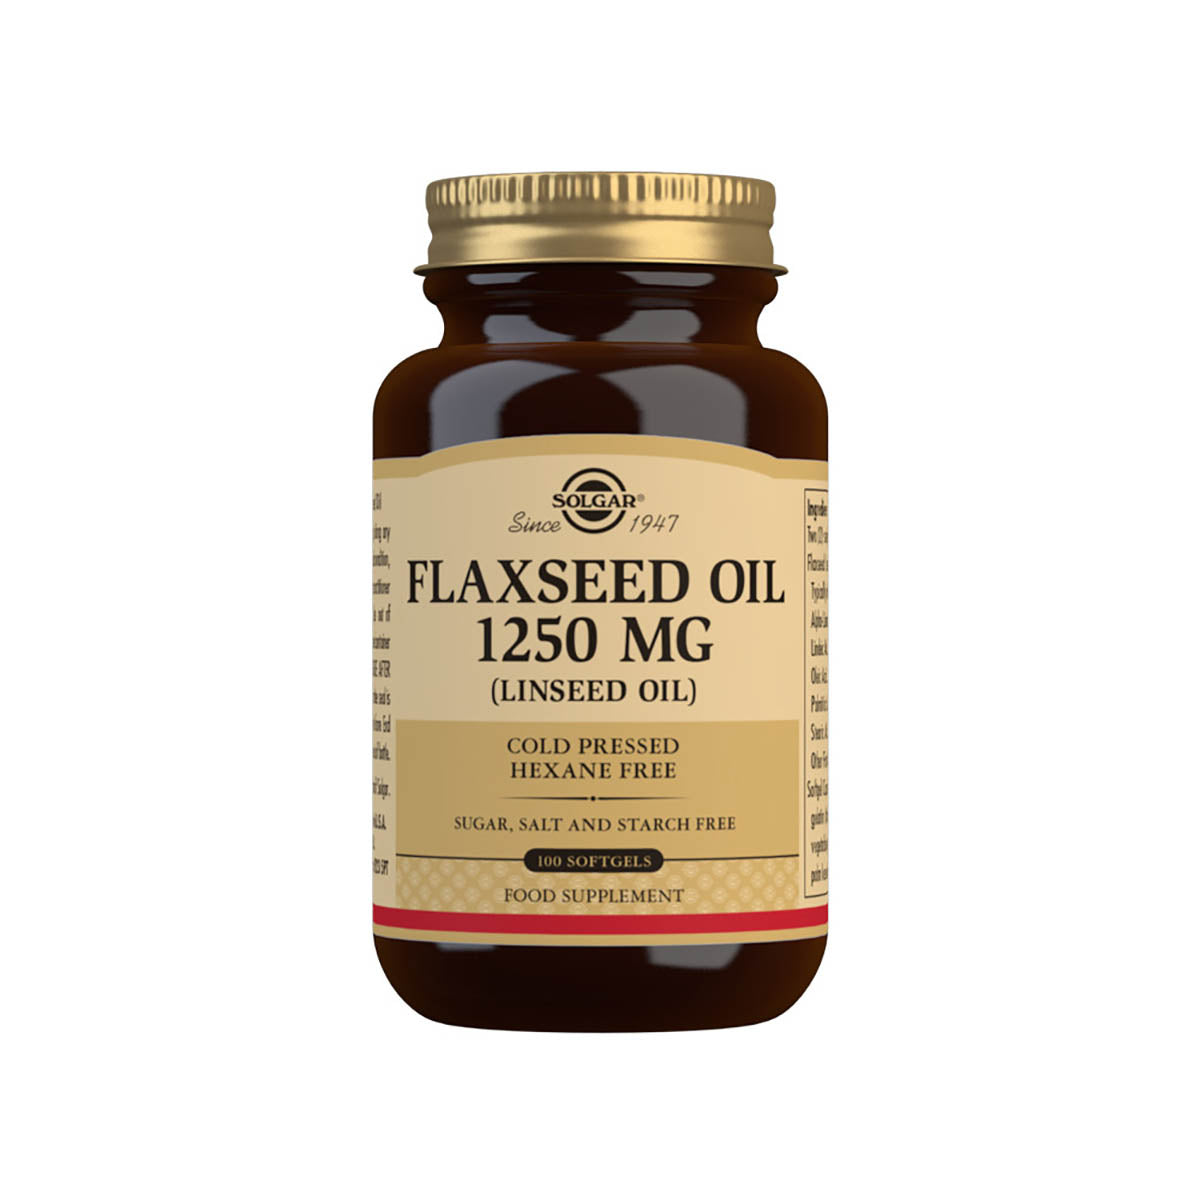 Solgar® Flaxseed Oil 1250 mg Softgels - Pack of 100